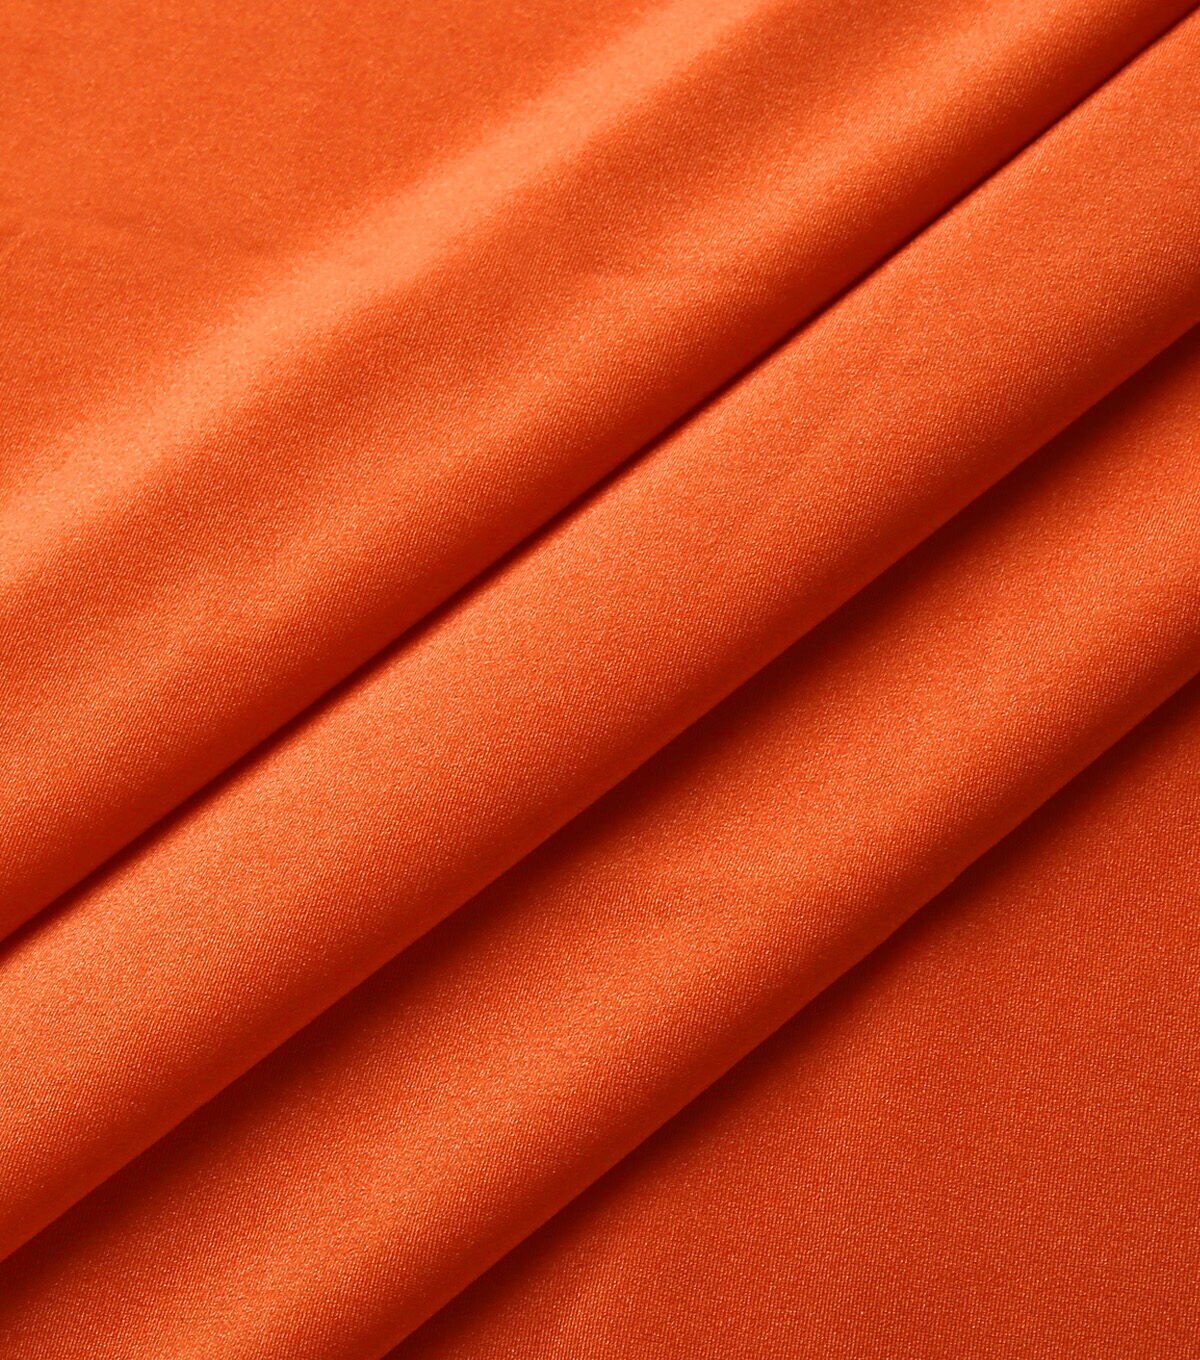 Performance Nylon Spandex Solid Fabric Red Orange | JOANN